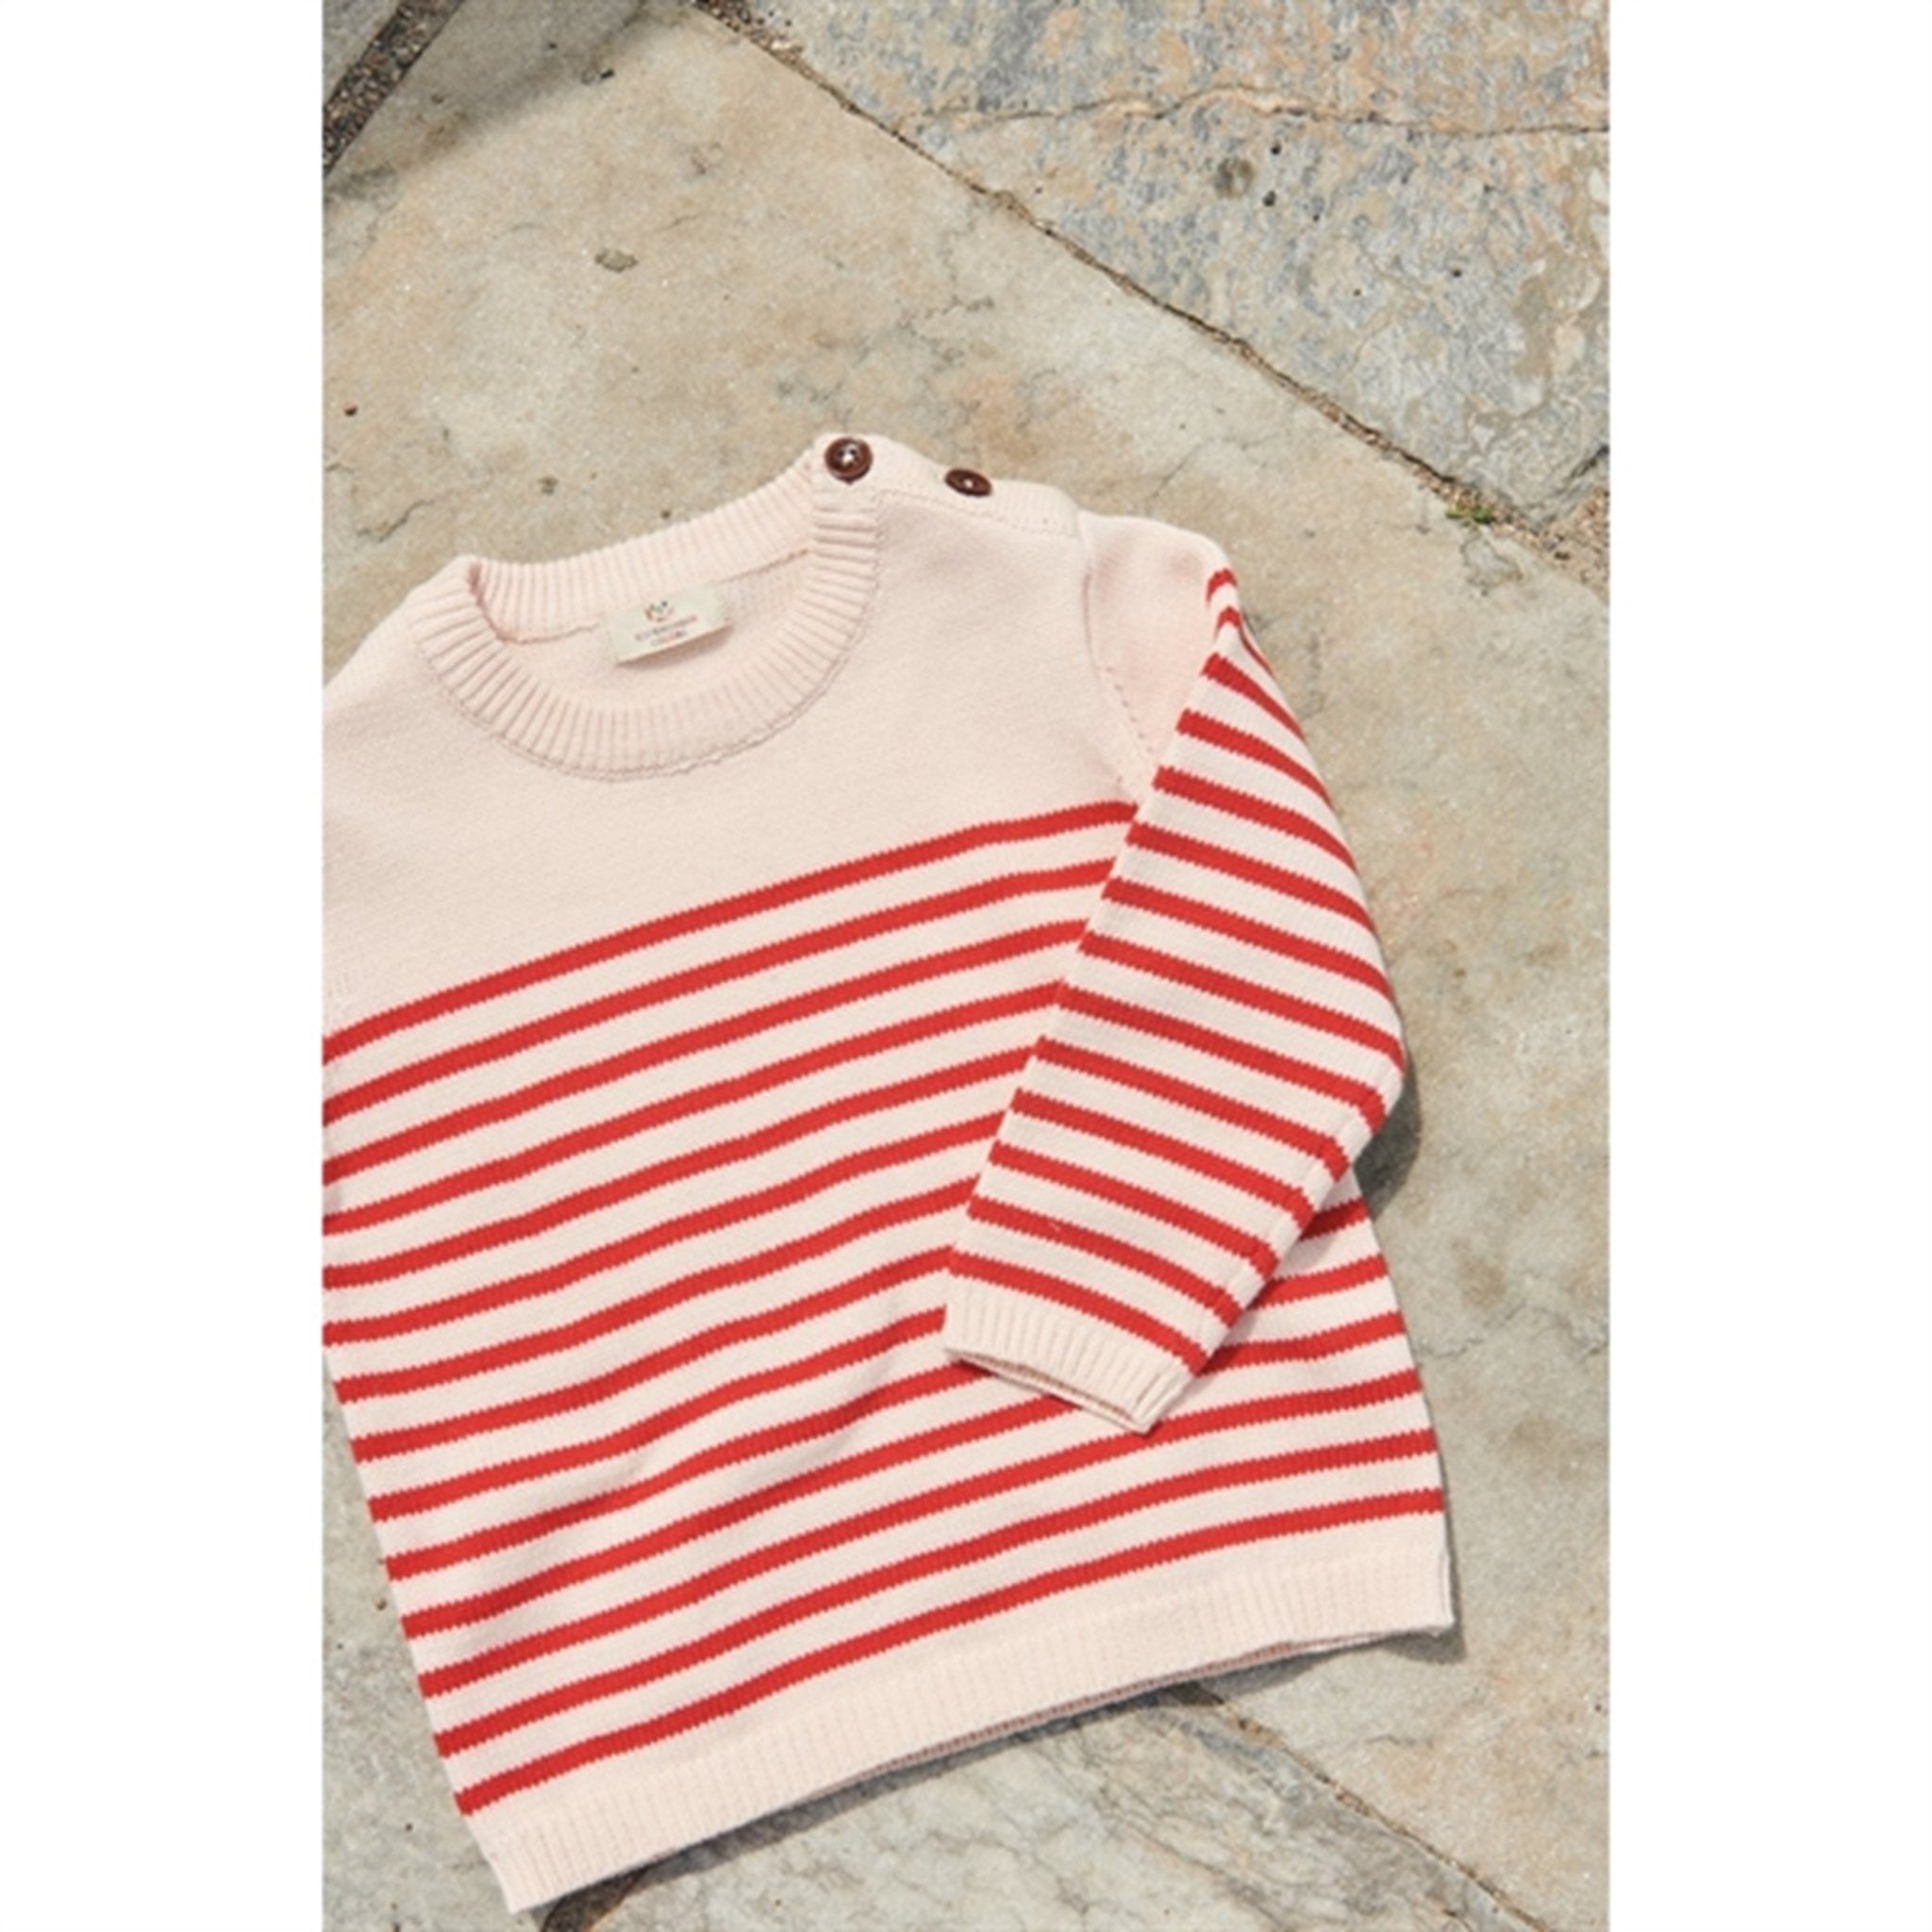 Copenhagen Colors Dusty Rose/Red Comb. Strikk Sailor Stripe Sweater 6